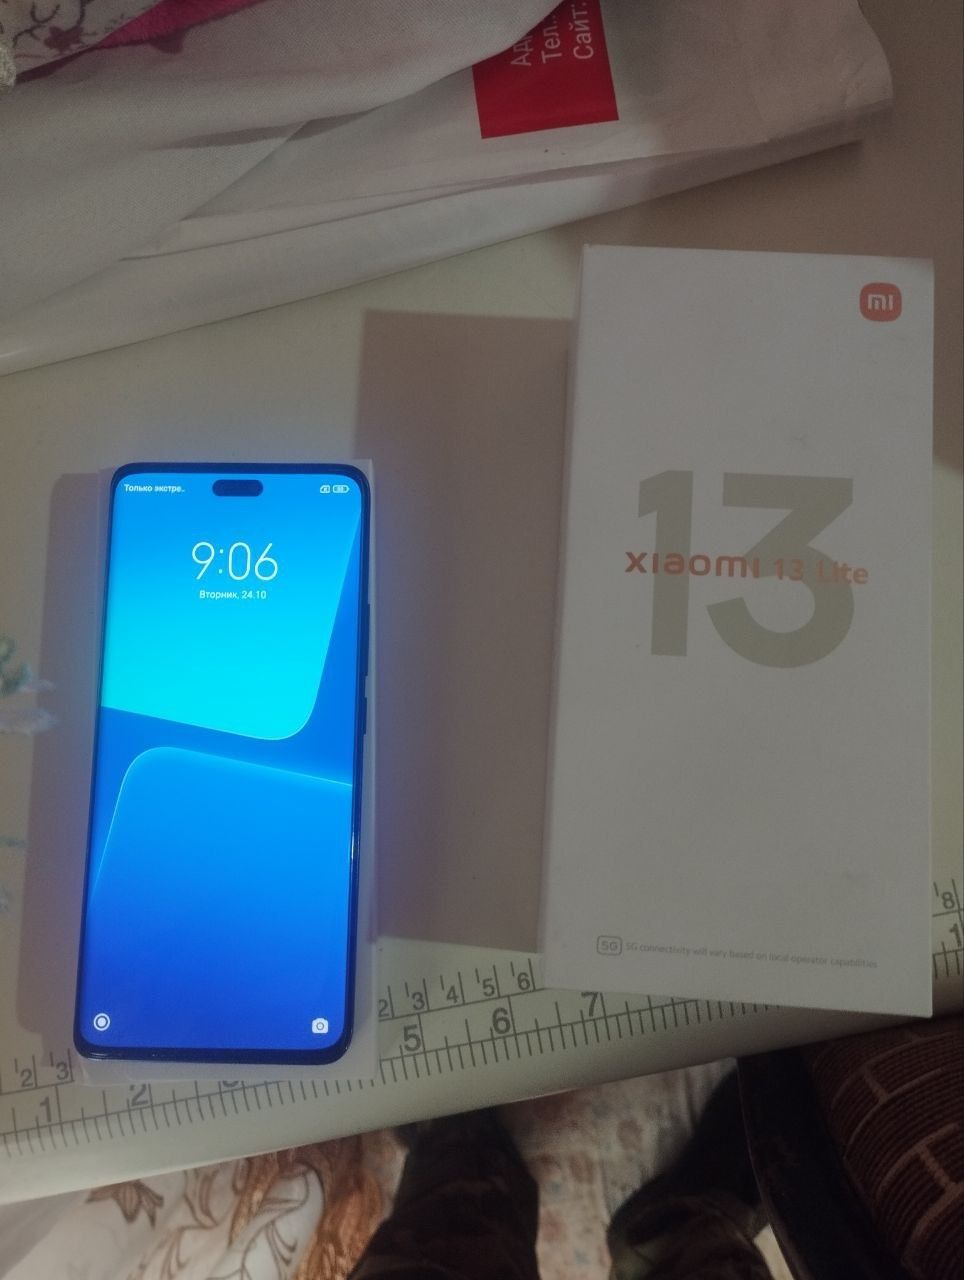 Xiaomi Mi 13 Lite